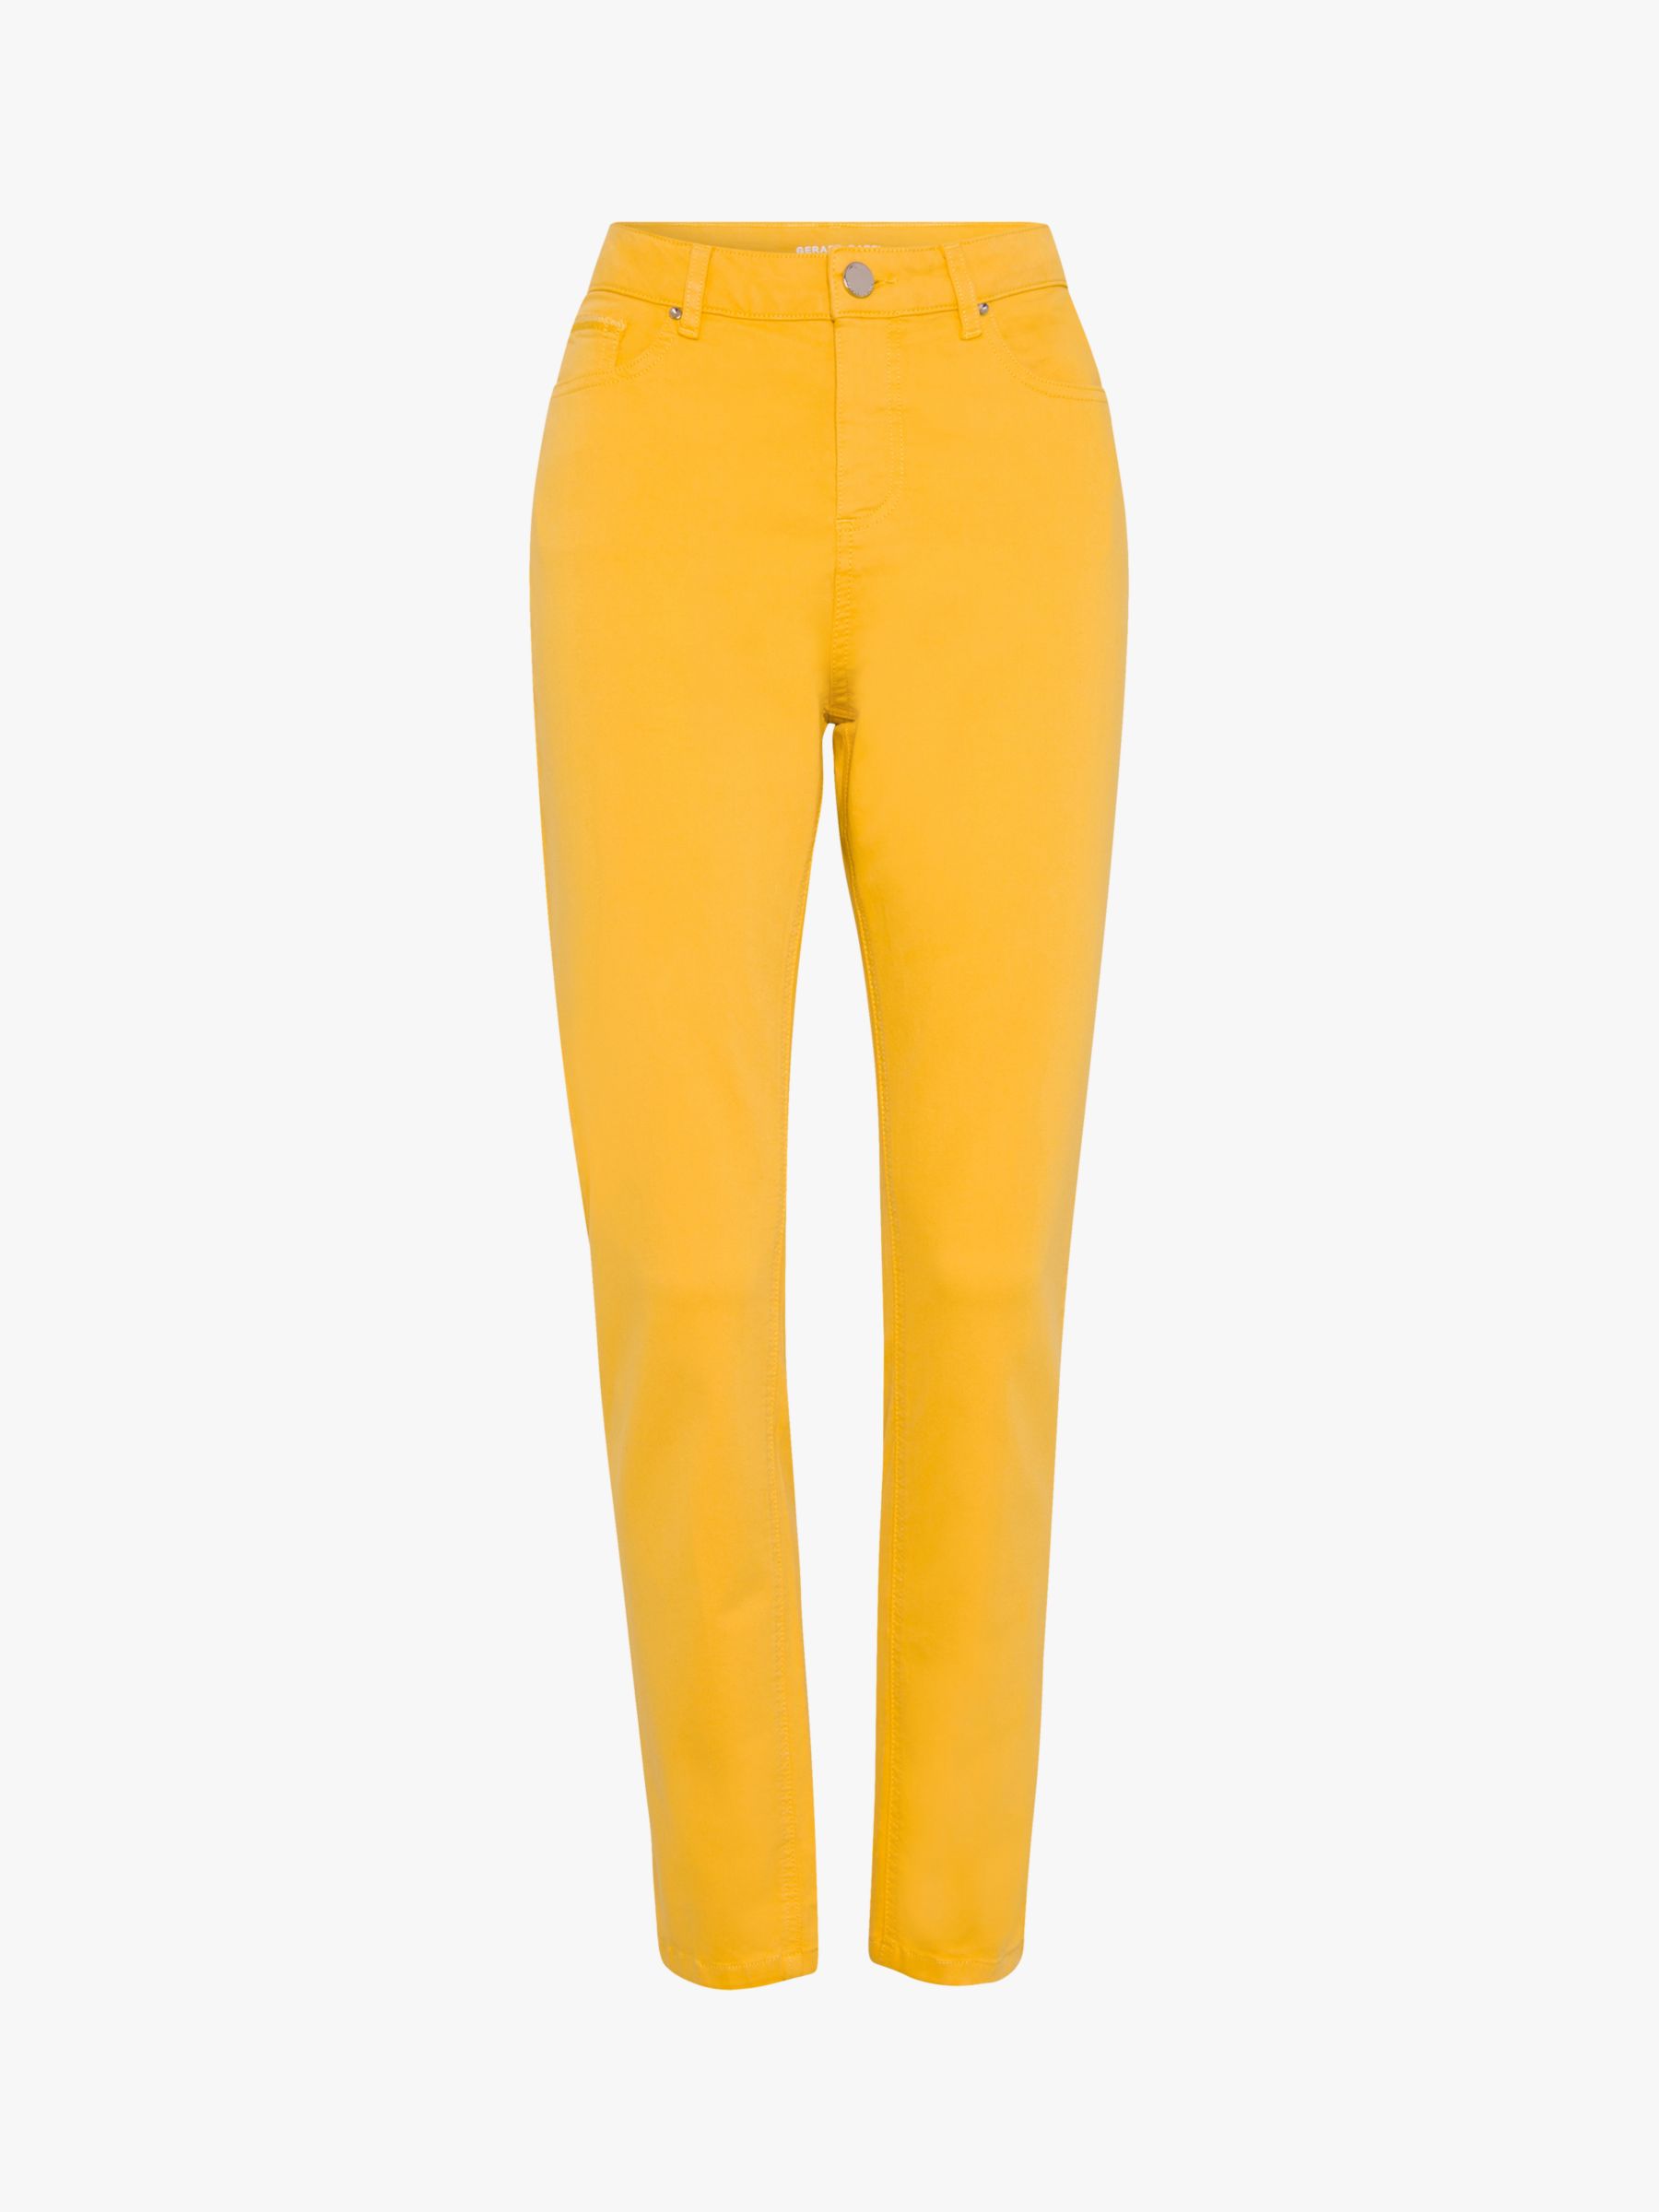 yellow jeans women